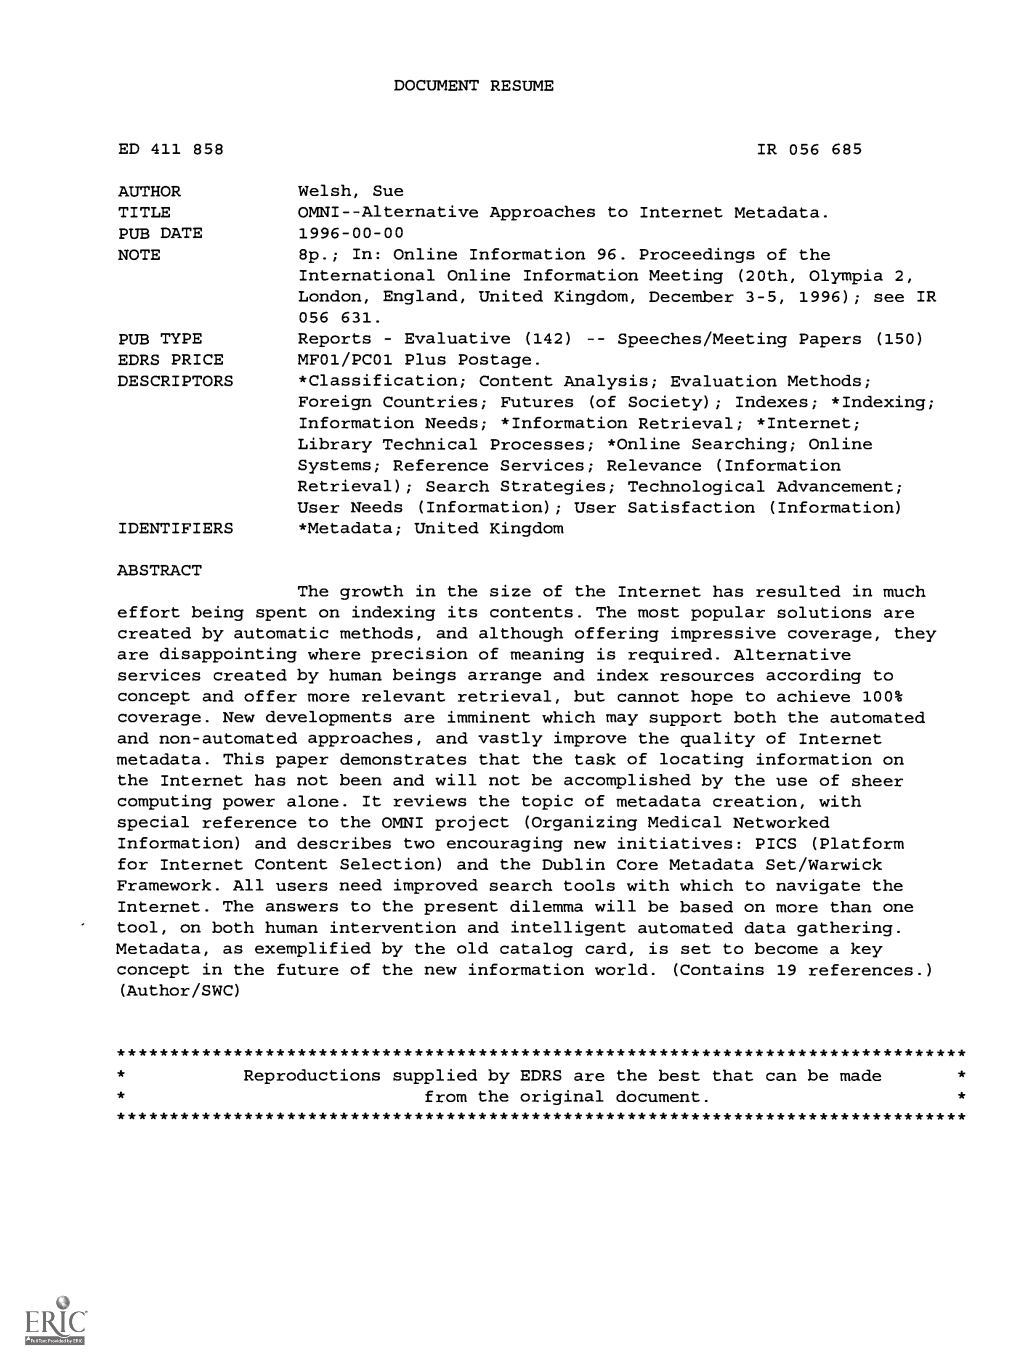 OMNI--Alternative Approaches to Internet Metadata. PUB DATE 1996-00-00 NOTE 8P.; In: Online Information 96